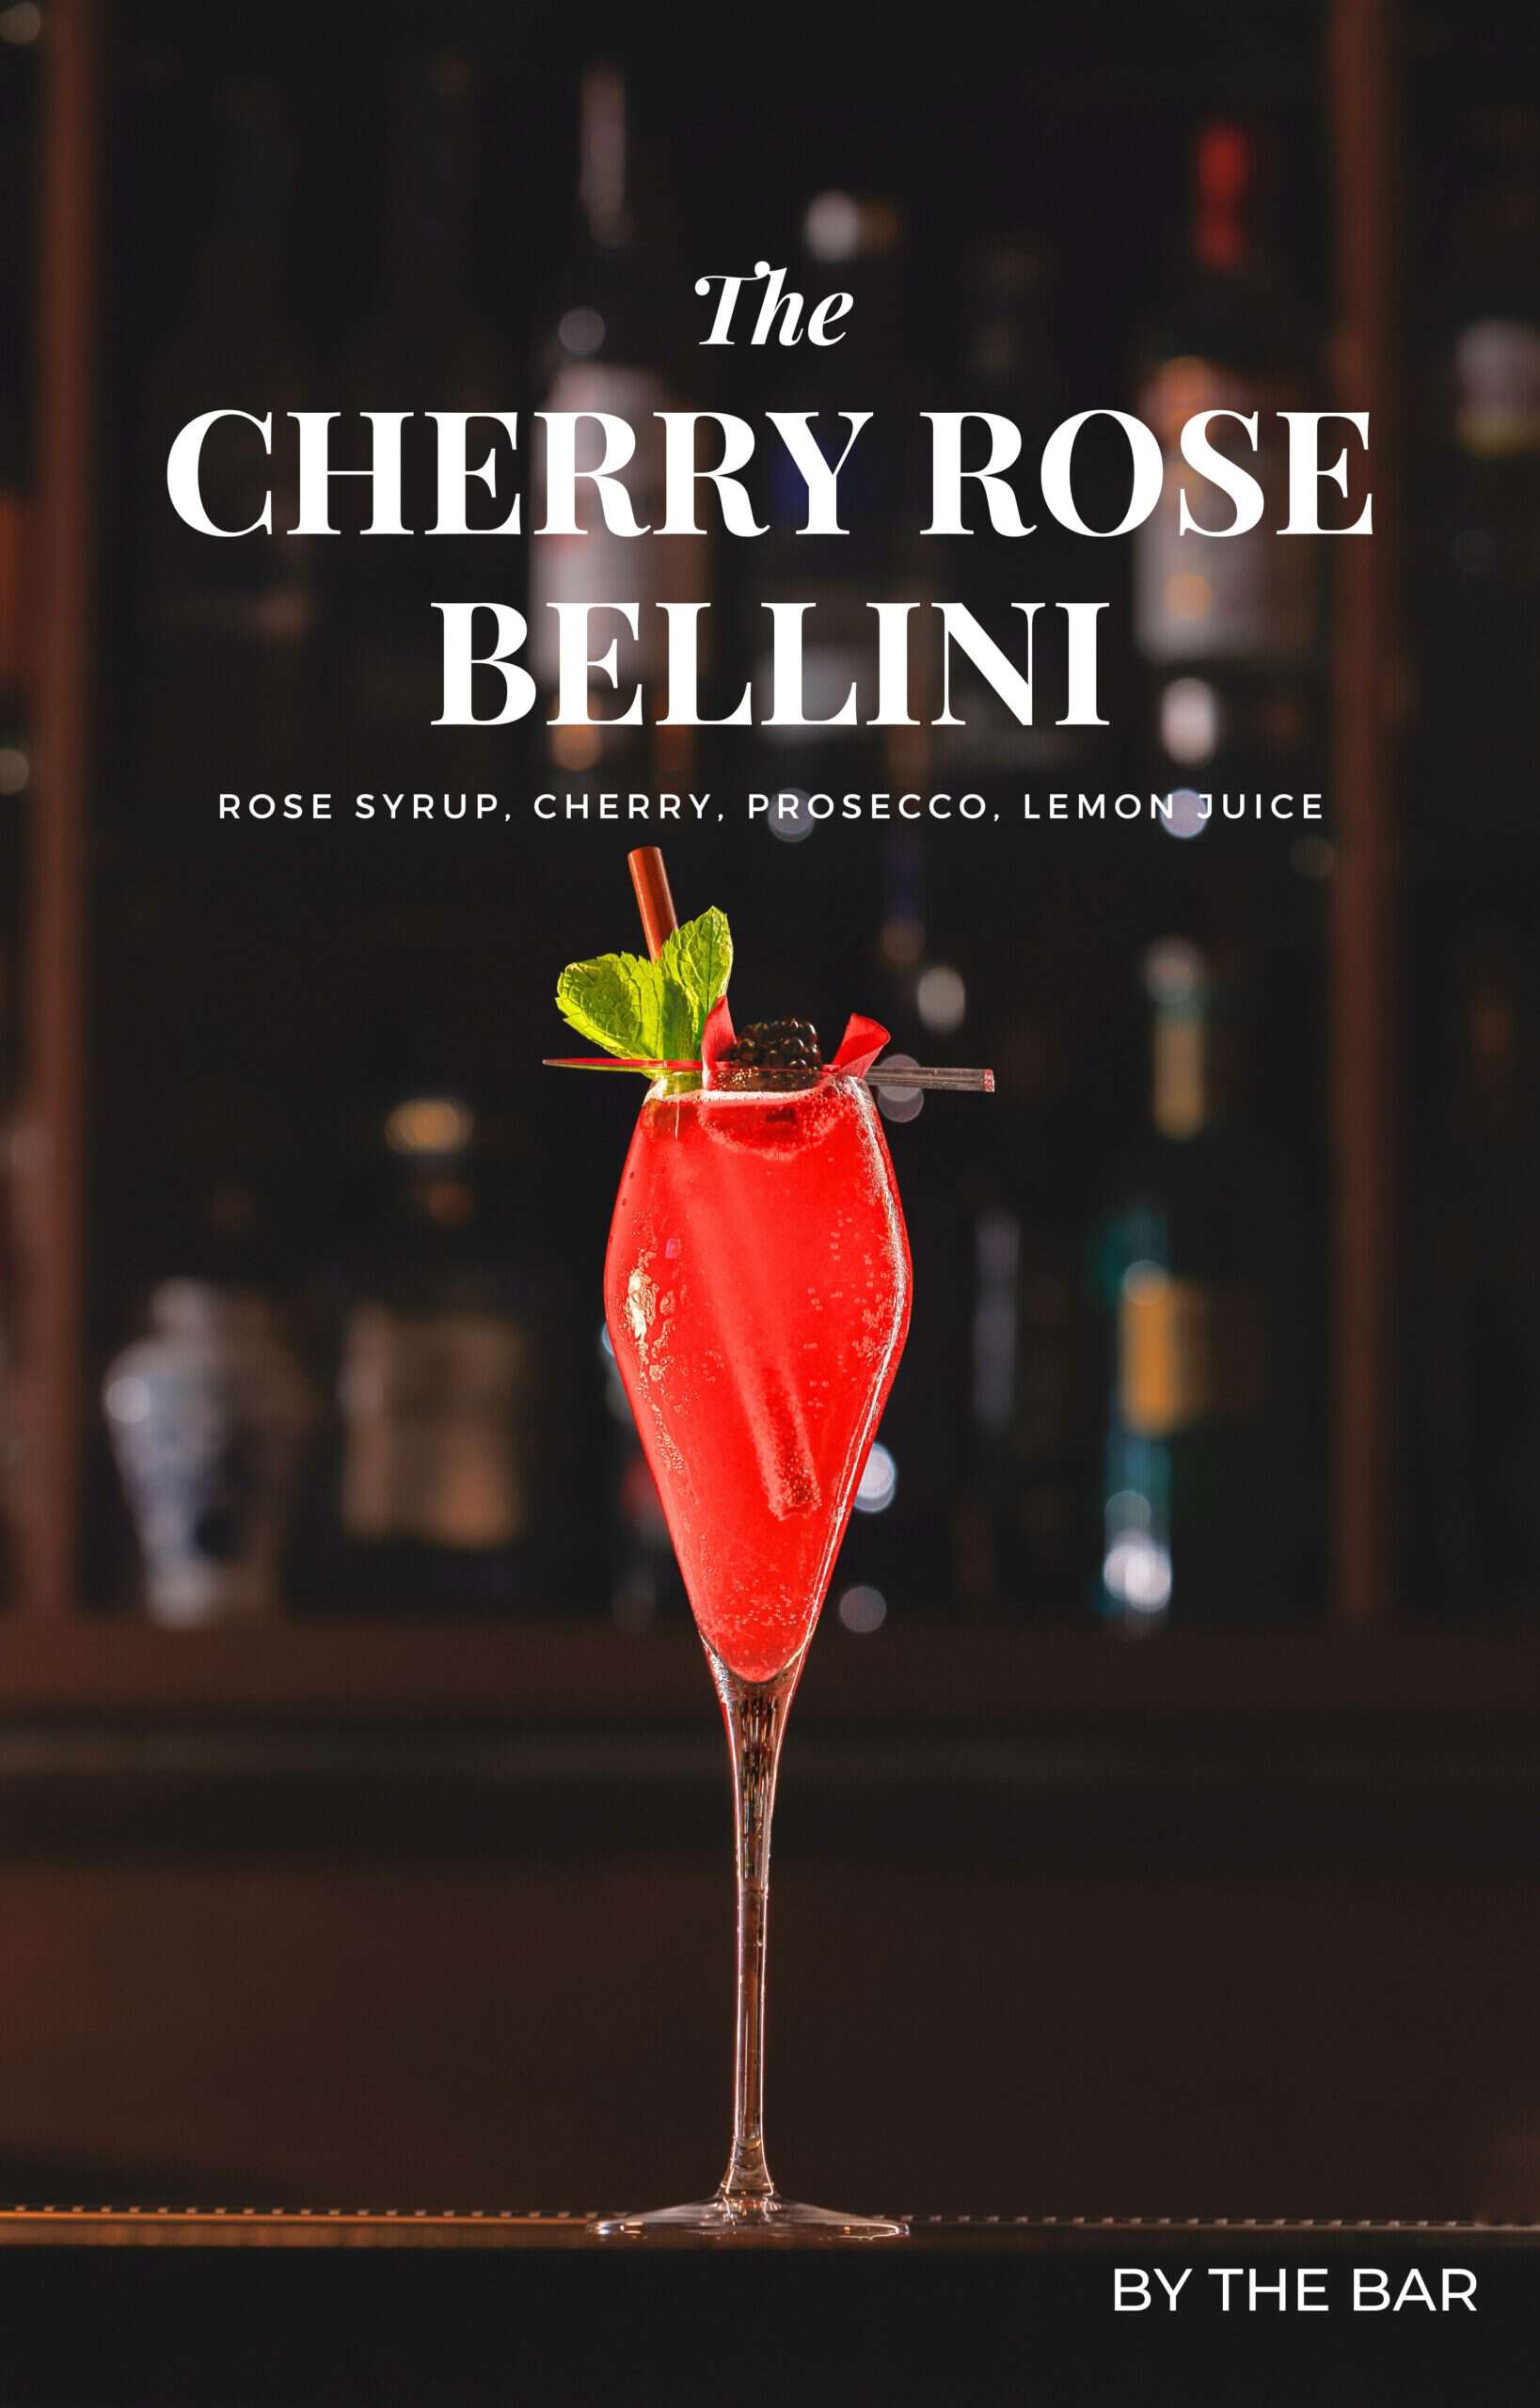 Cherry Rose Bellini Cocktail